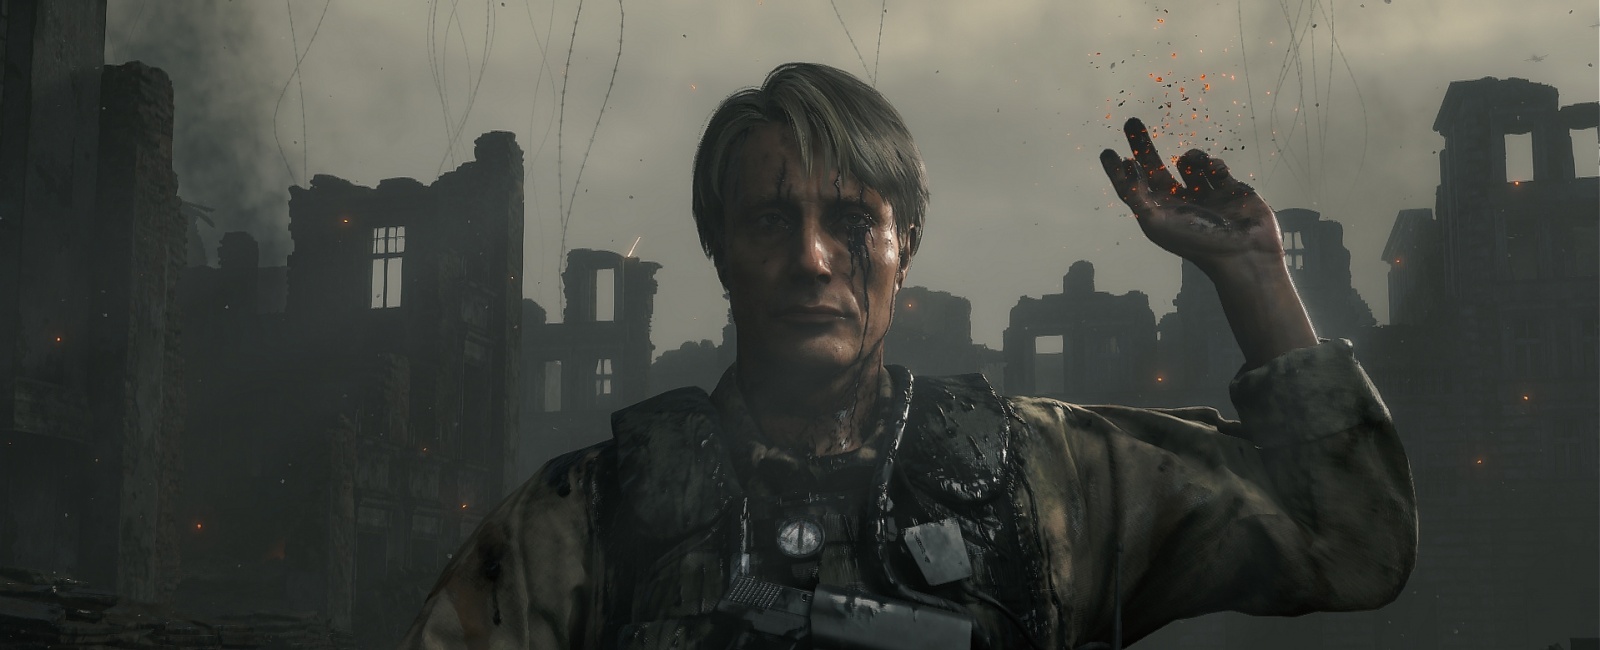 Fallout New Vegas Zombies Mod V2.0 adds new map & gameplay mechanics